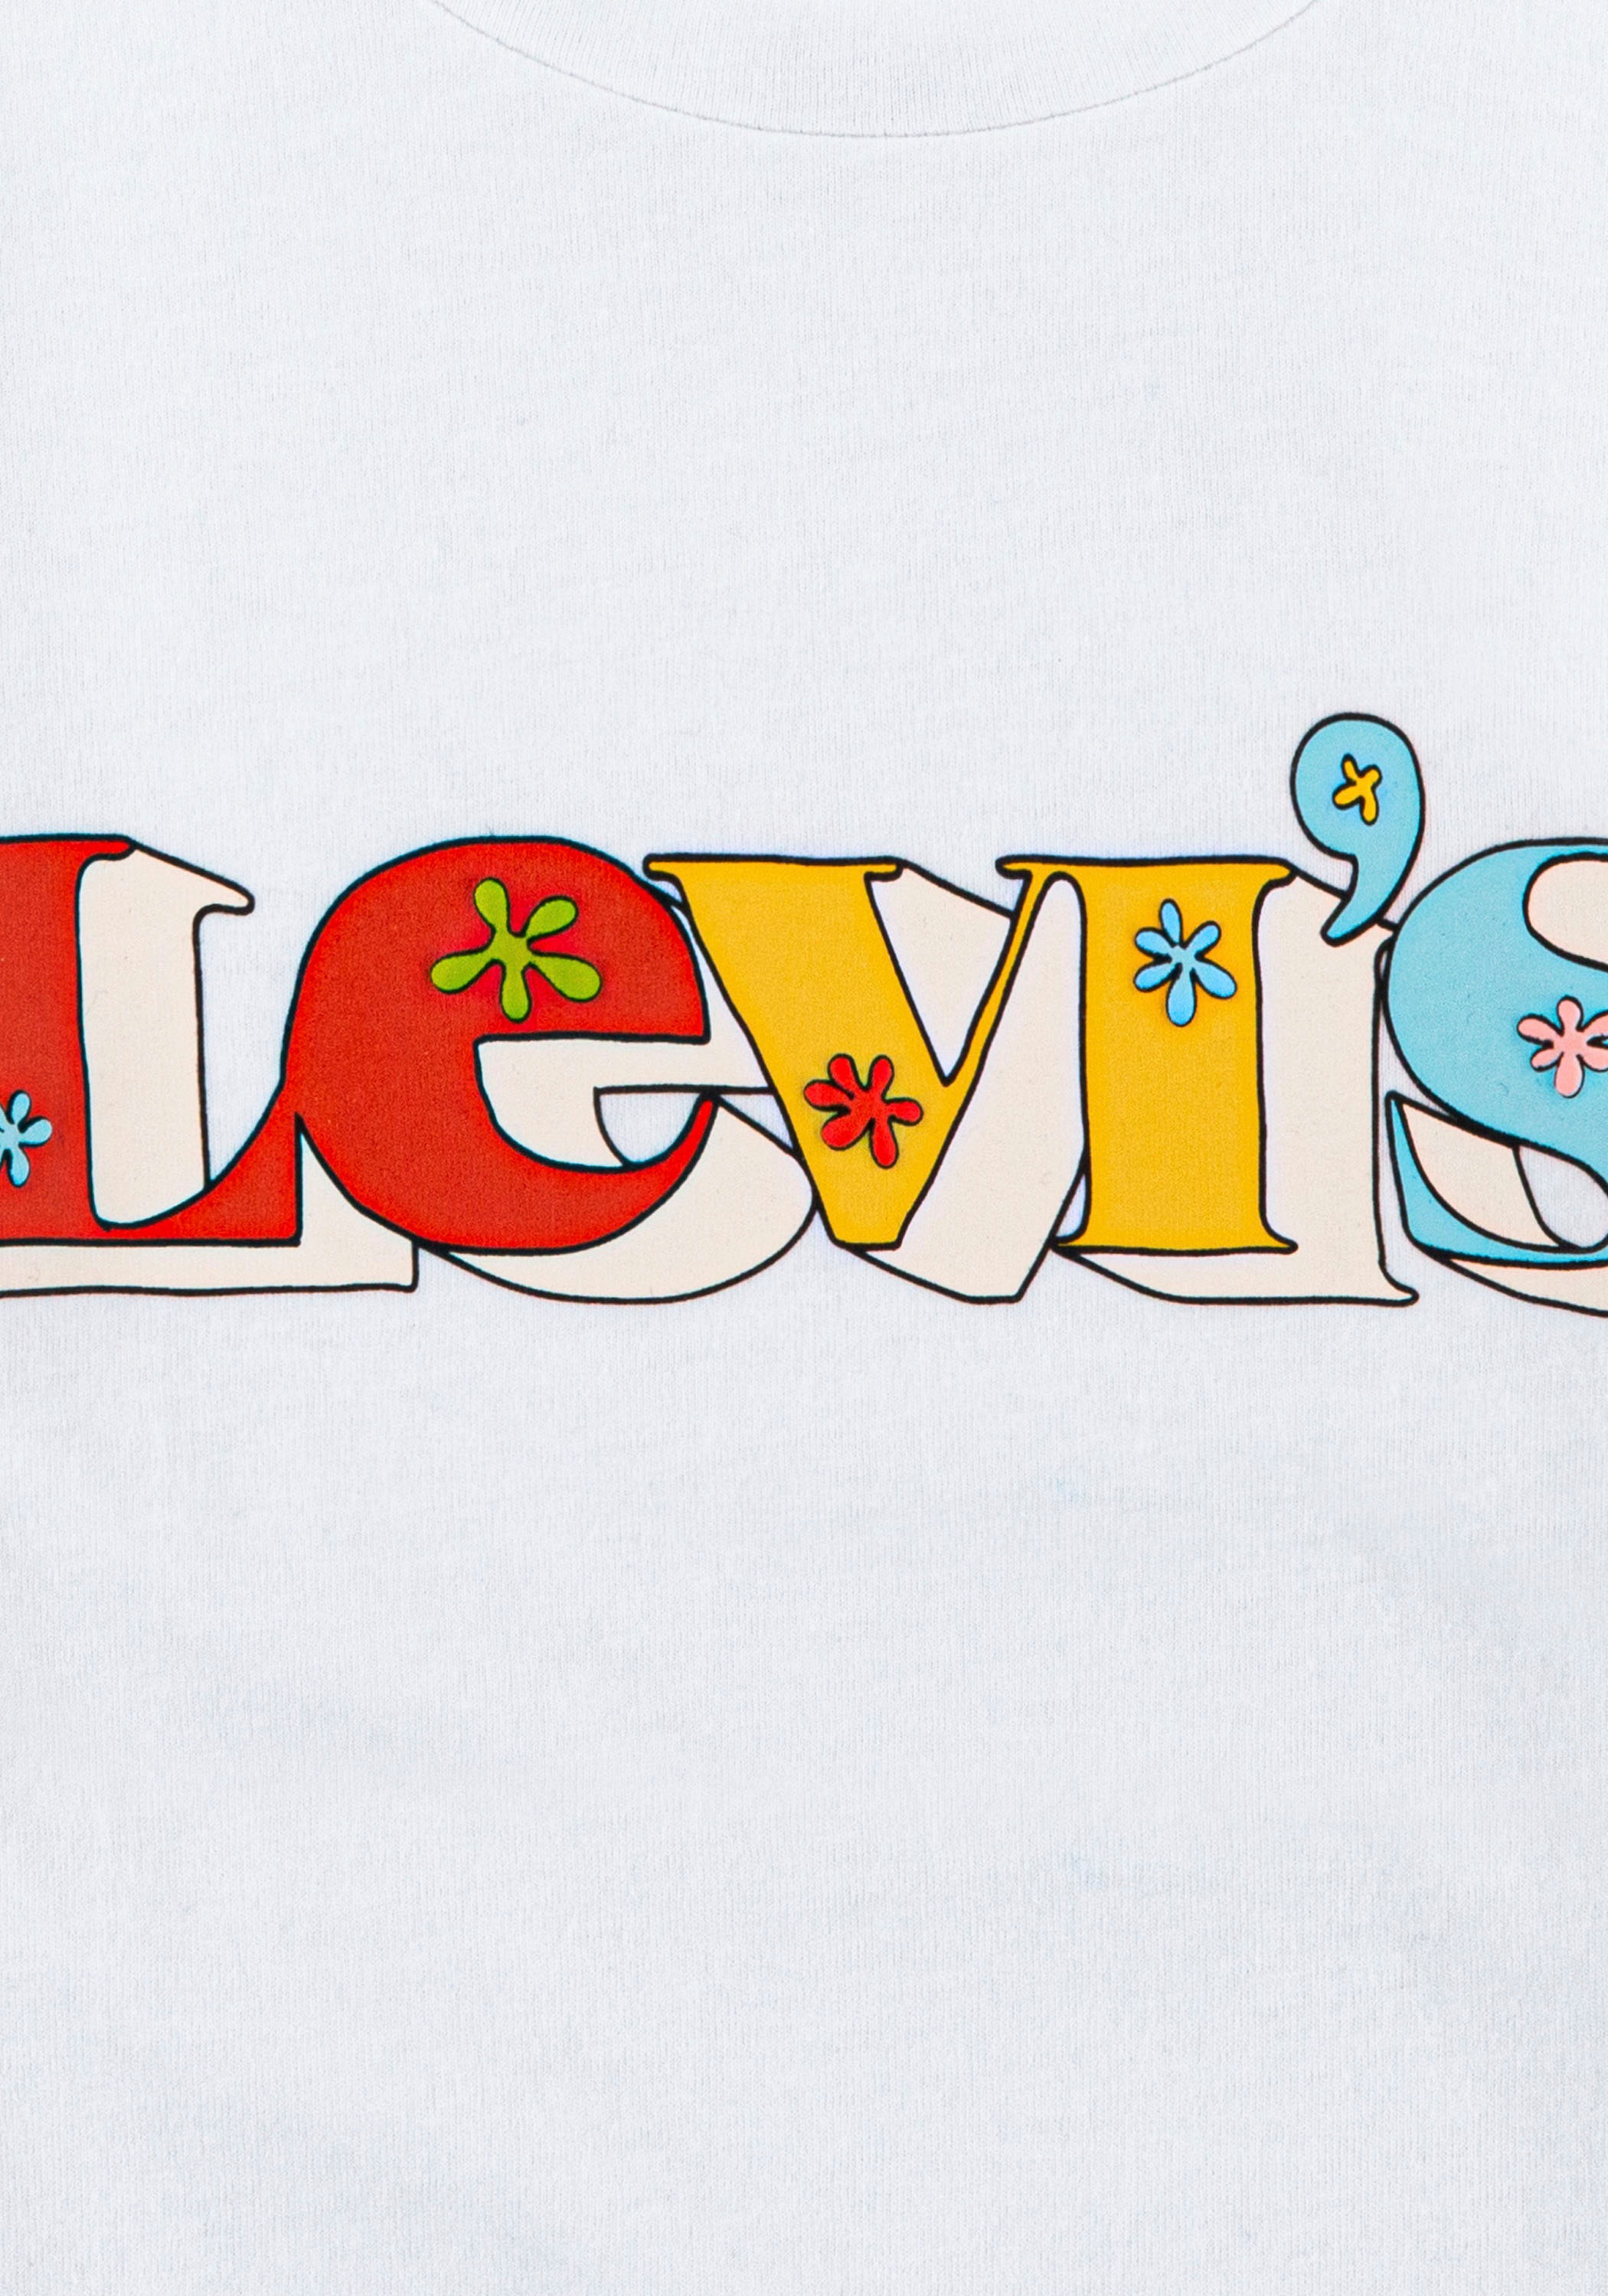 Levi's® Kids Langarmshirt »LVG LONG SLEEVE GRAPHIC«, TEEN girl